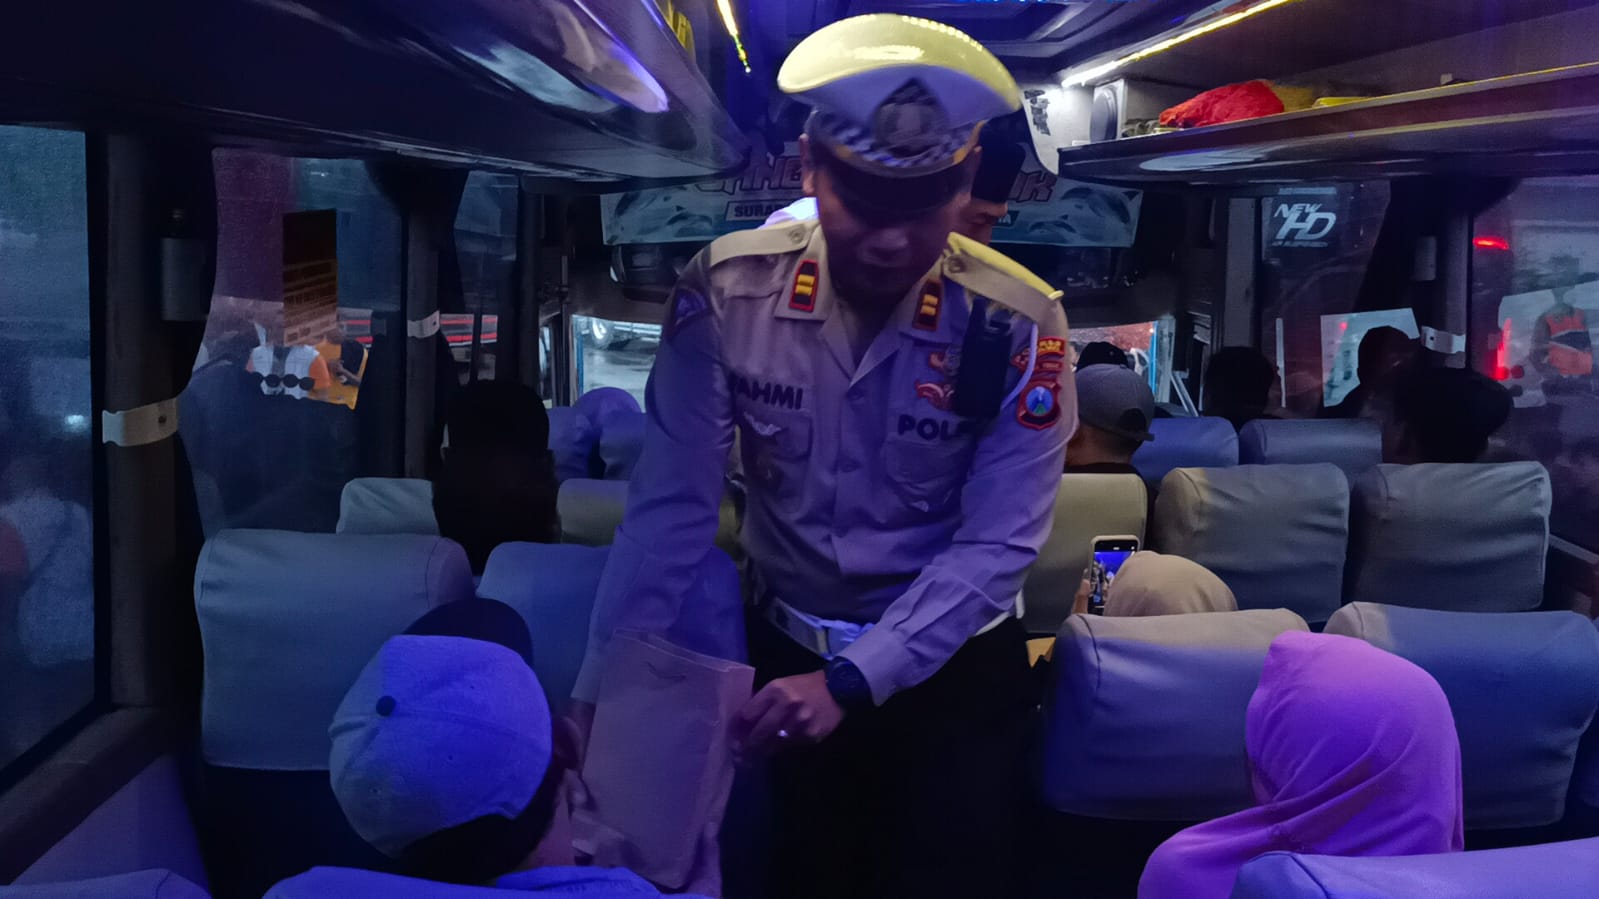 Jelang Sahur, Polres Ngawi Tebar Kurma untuk Penumpang Bus